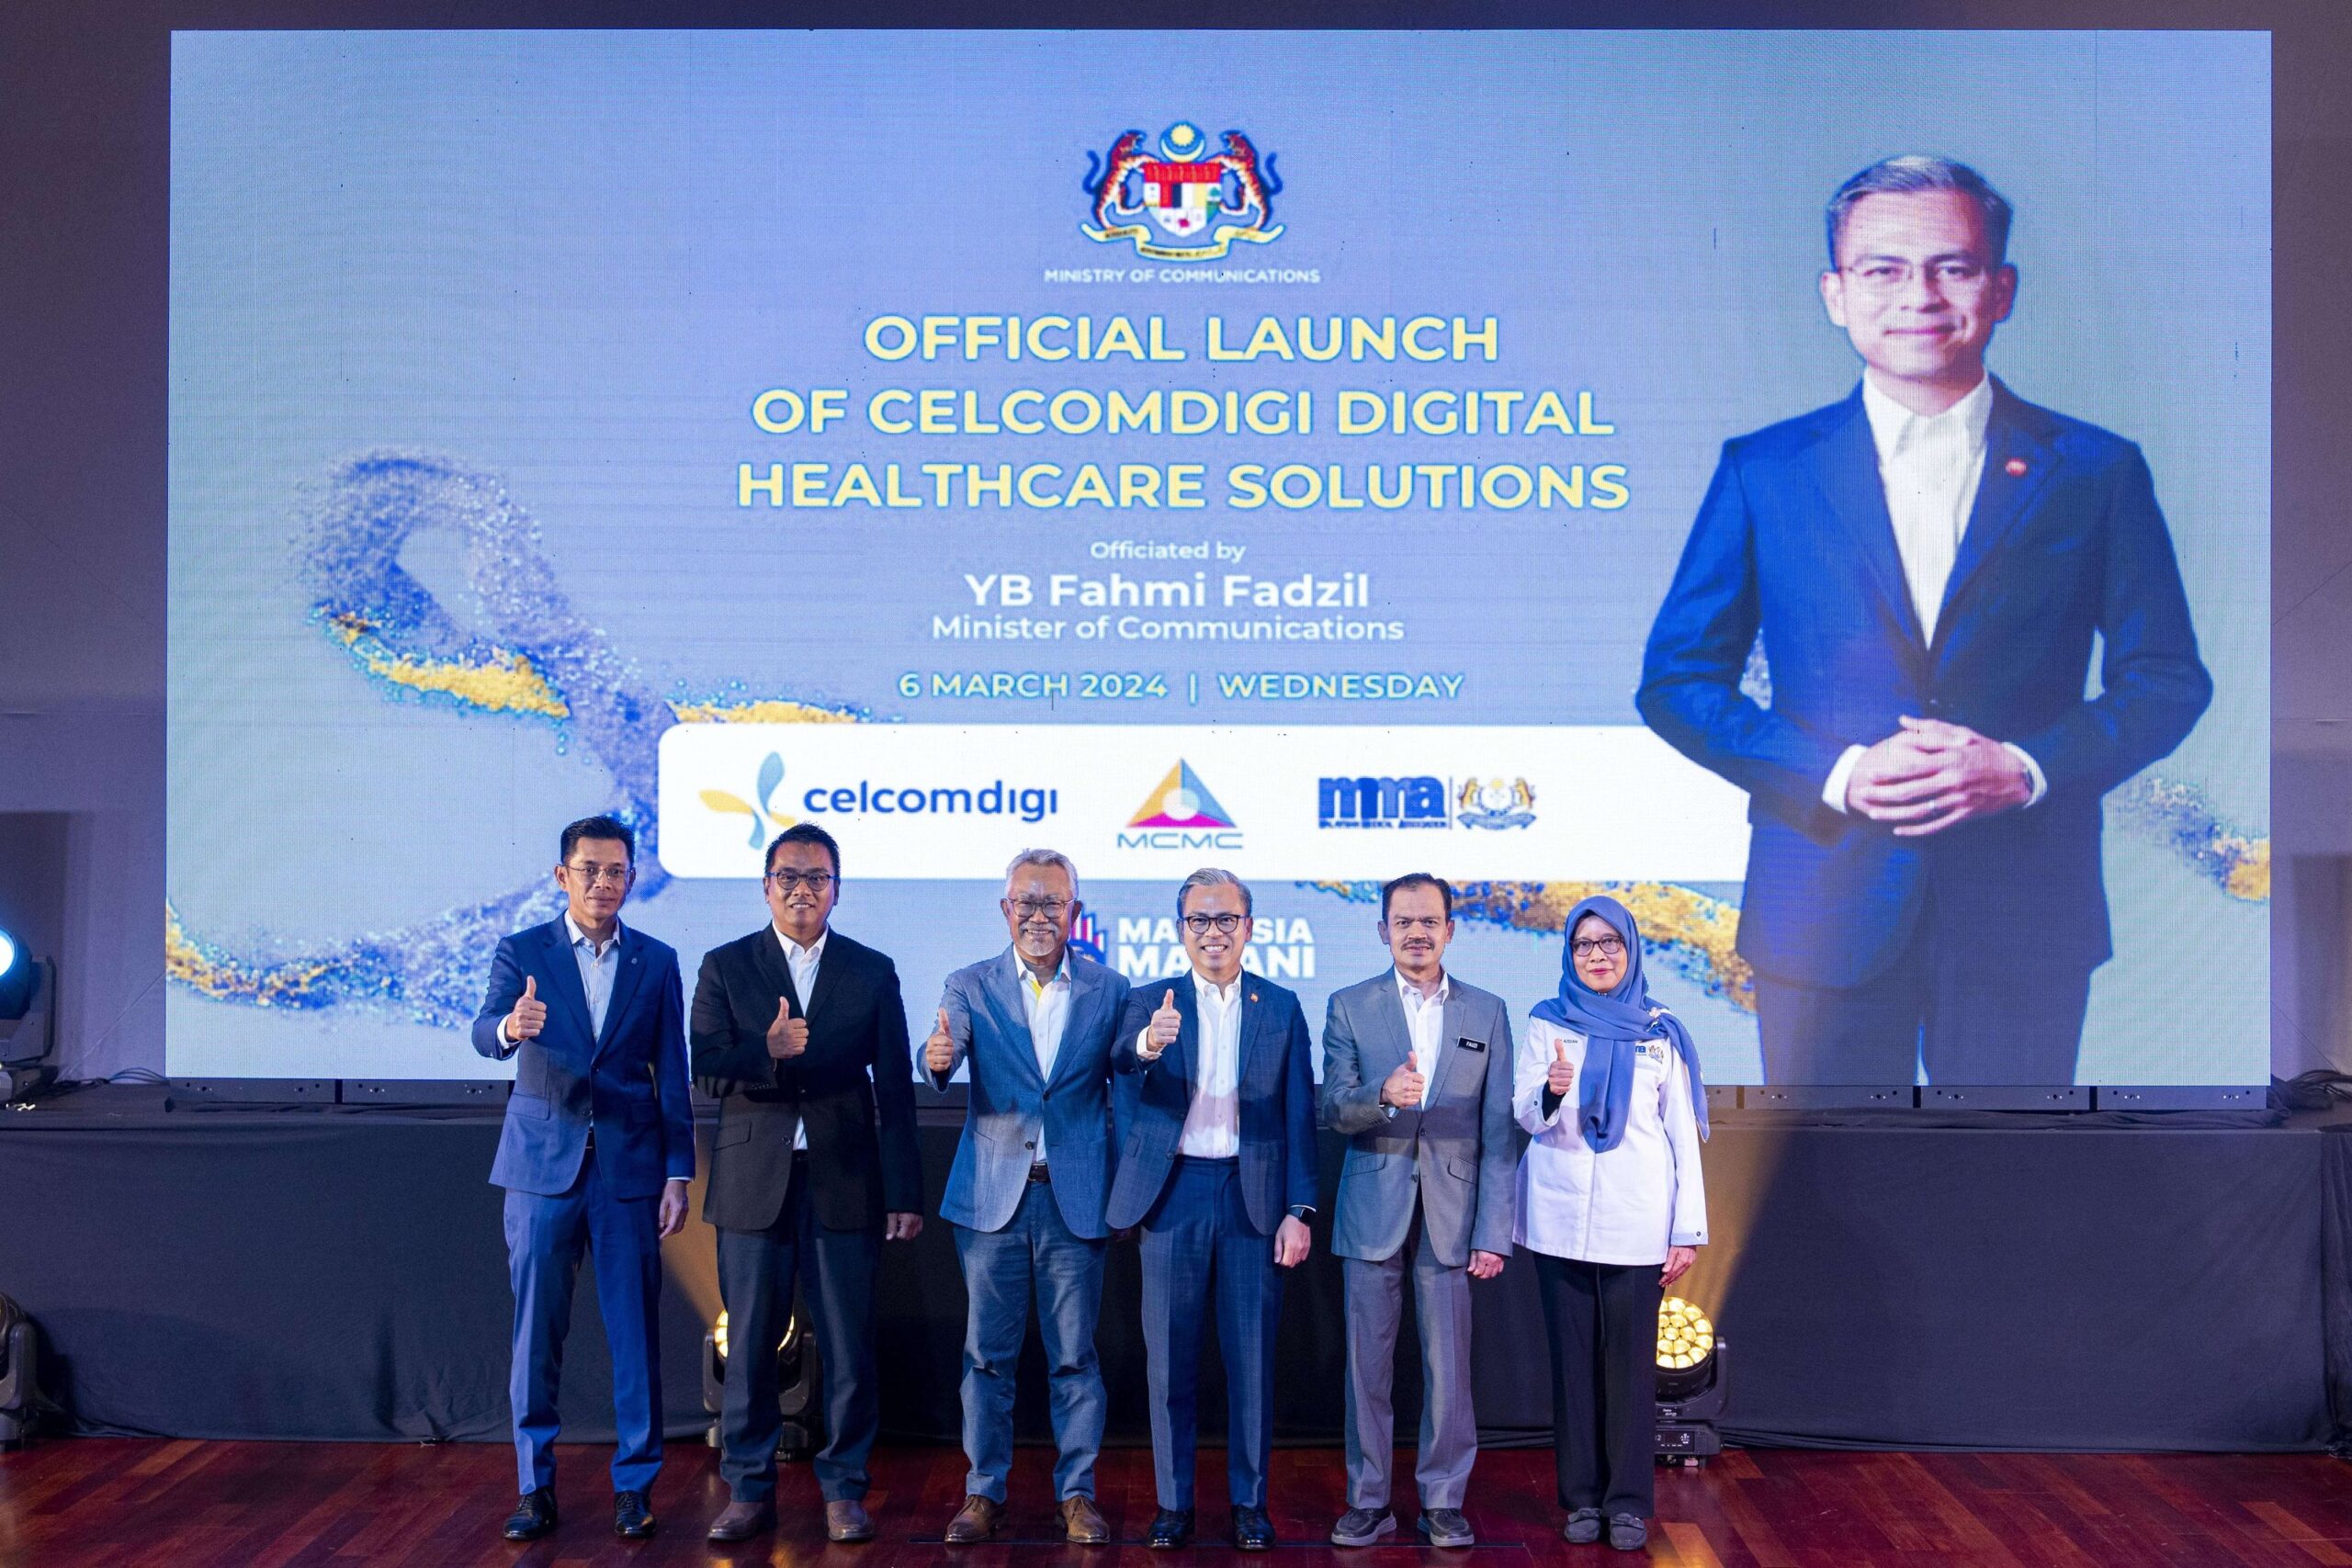 Launch of CelcomDigi digital healthcare solutions